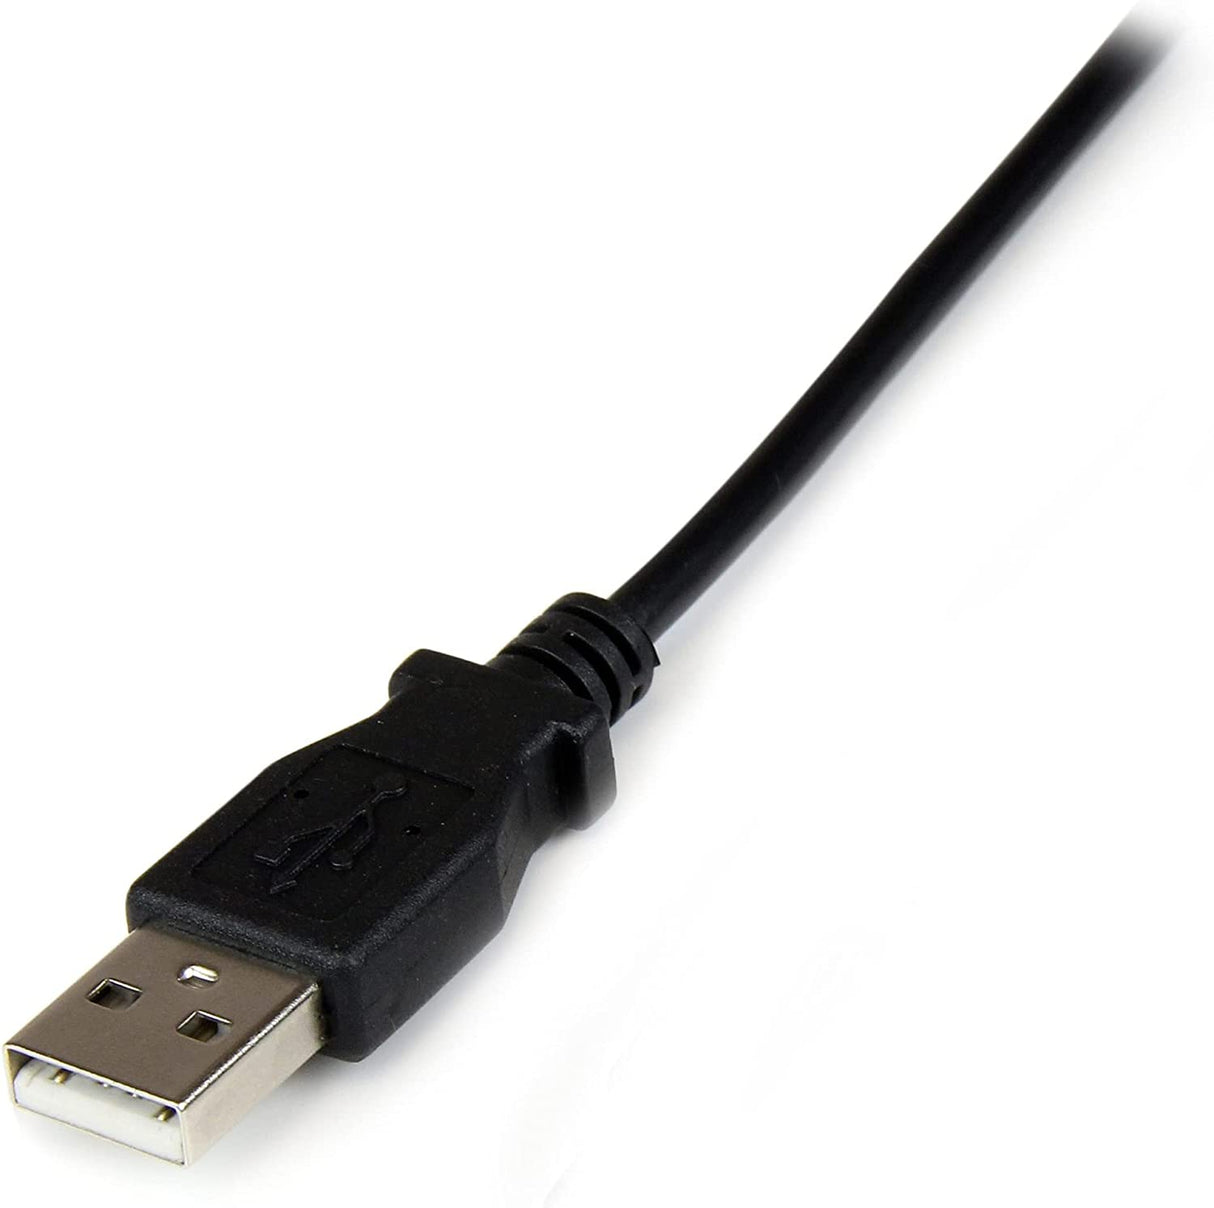 Cisco StarTech.com 2m USB to Type N Barrel Cable - USB to 5.5mm 5V DC Power Cable - USB to DC Power - 2 meter (USB2TYPEN2M)